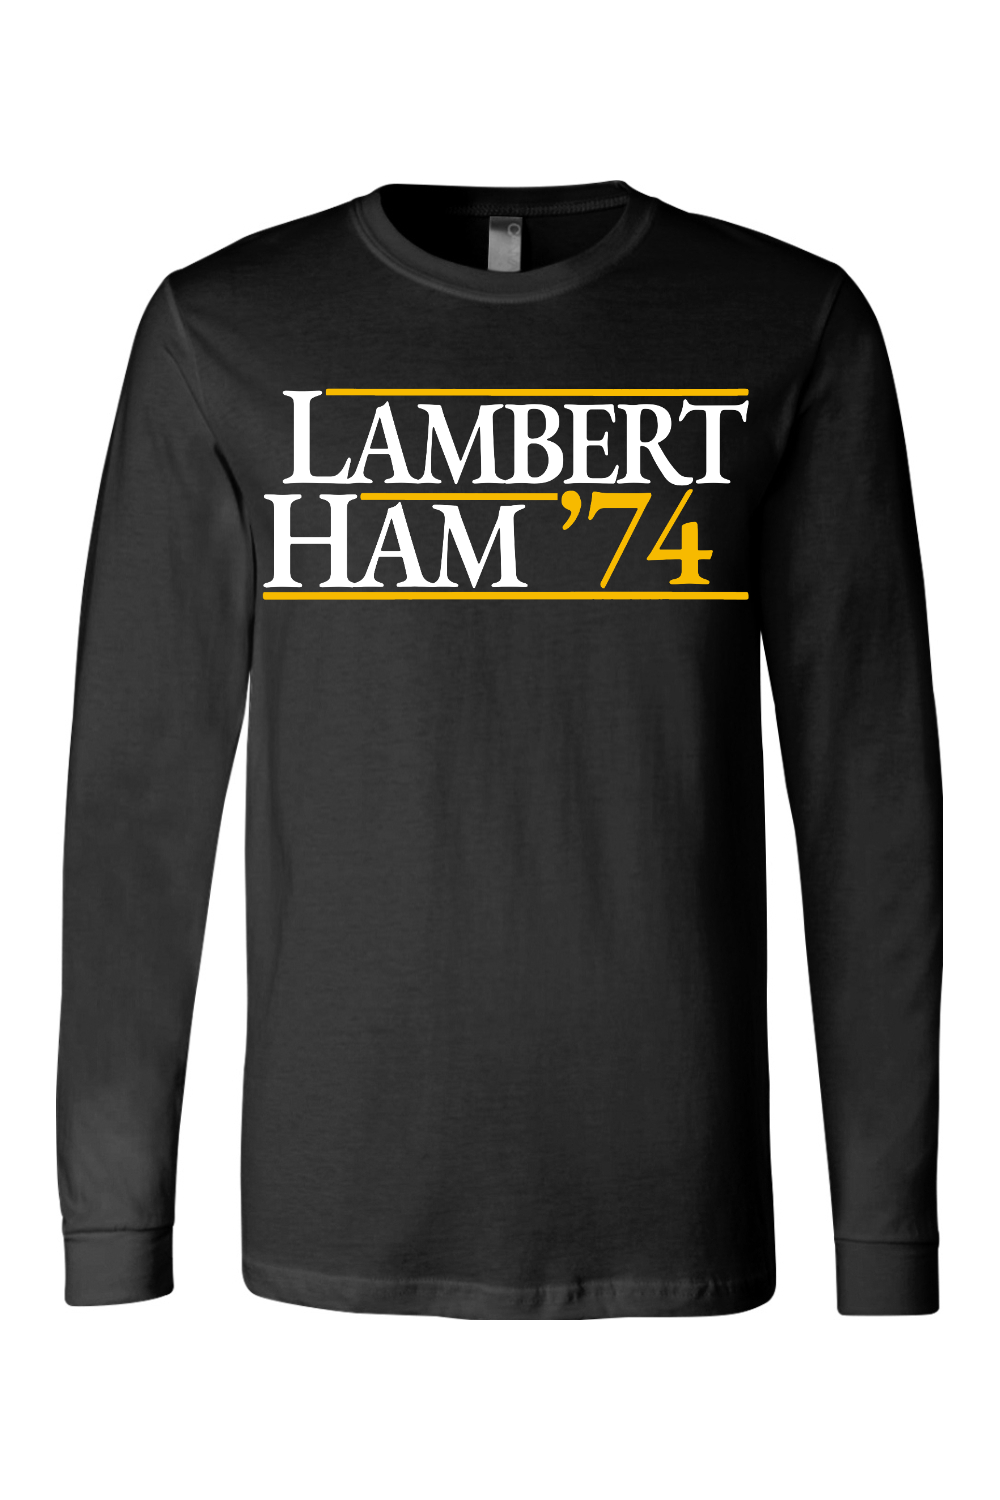 Lambert Ham '74 - Long Sleeve Tee - Yinzylvania